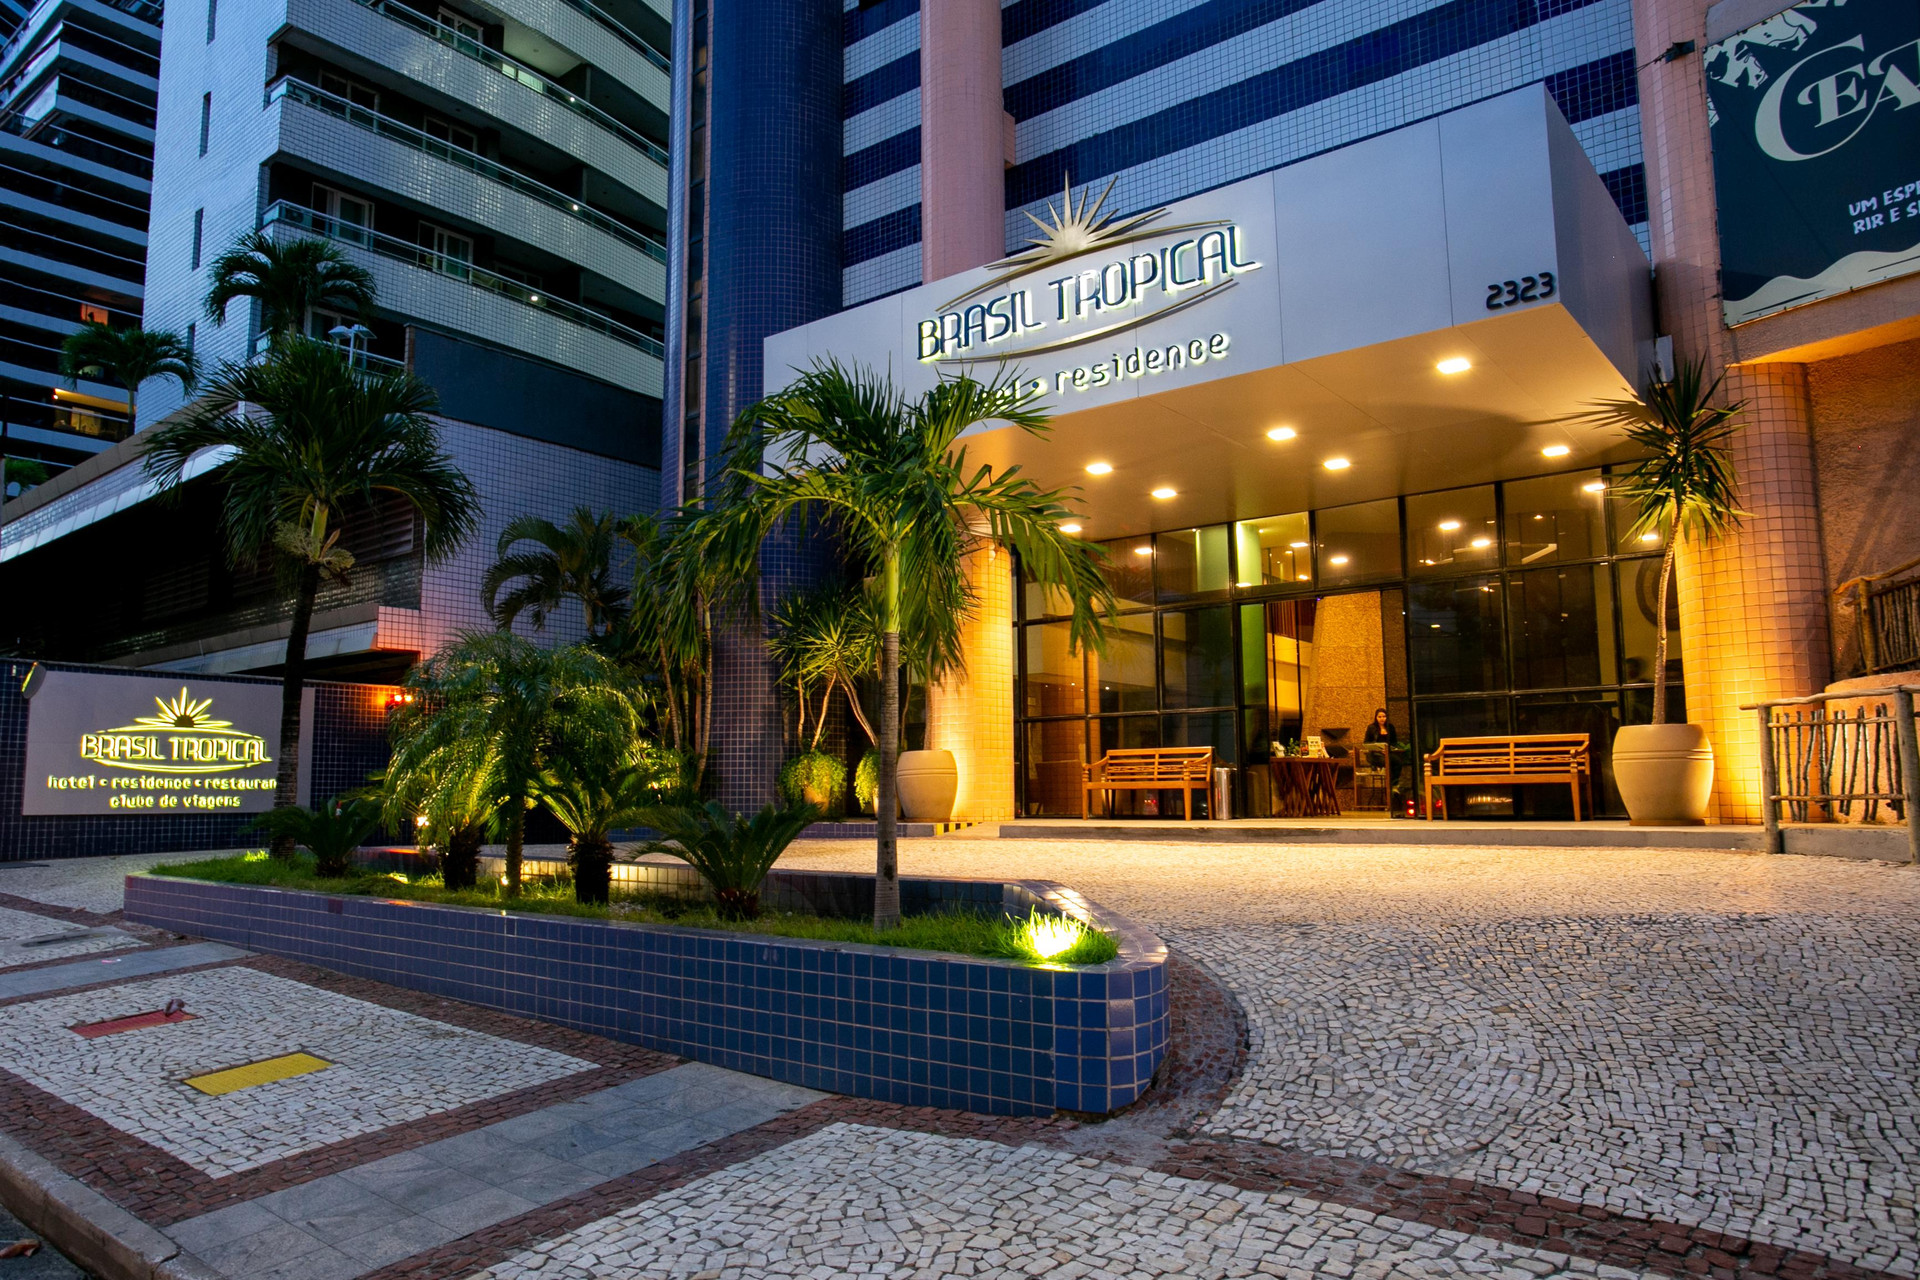 Exterior View Hotel Brasil Tropical